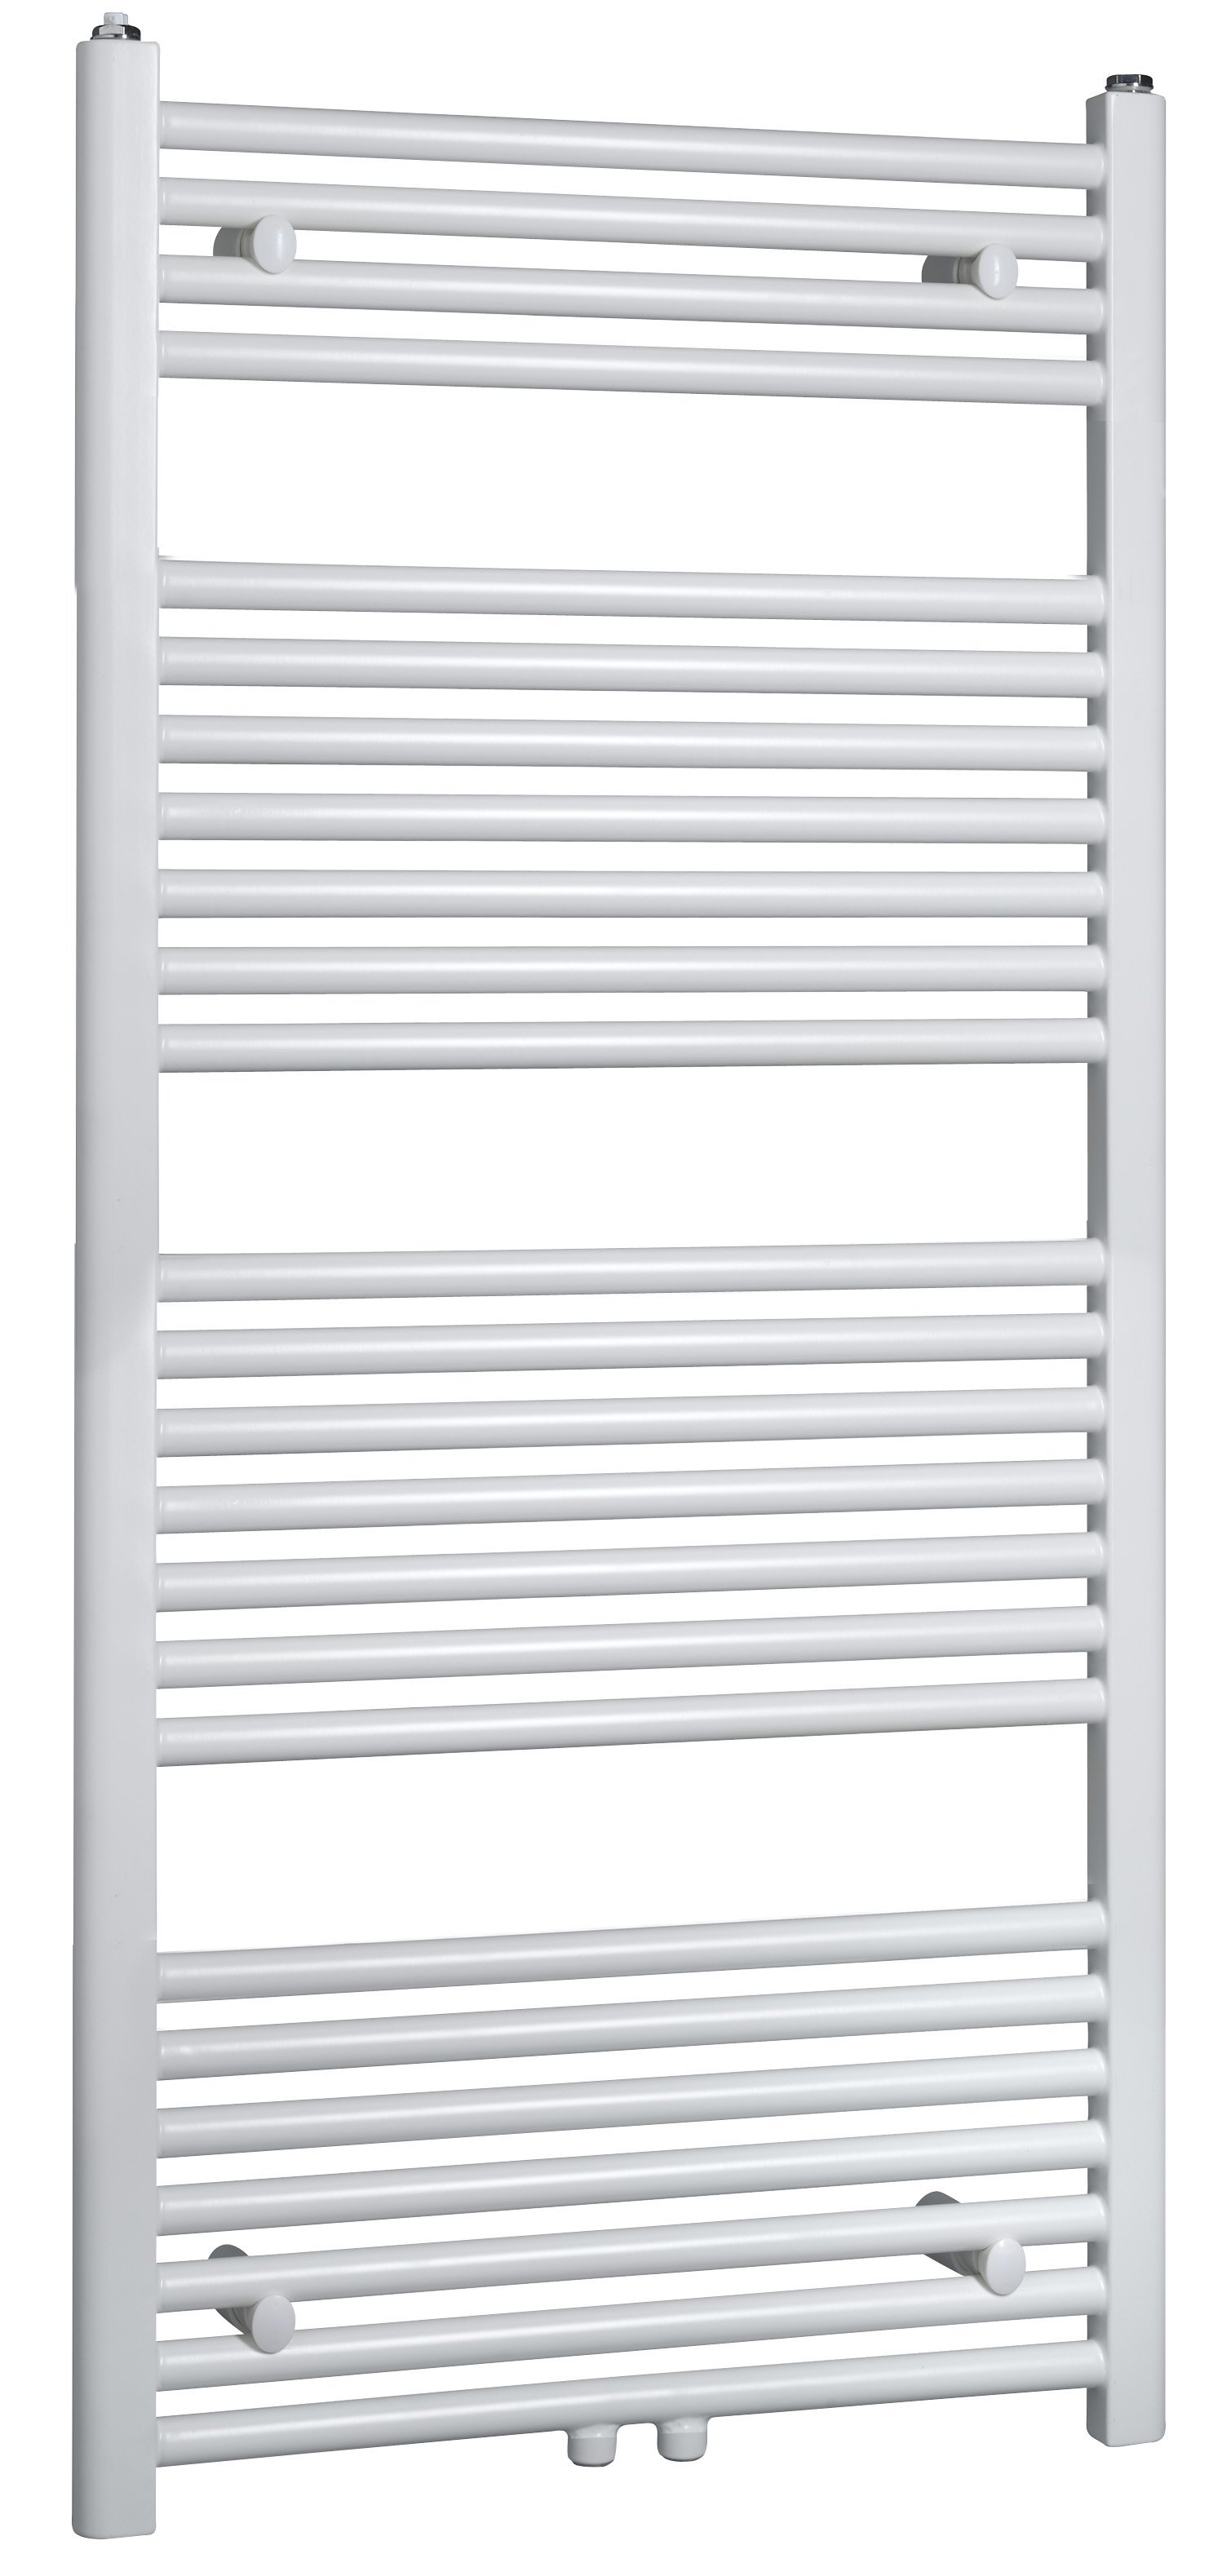 Best Design Zero badkamer radiator 120 x 60 cm wit